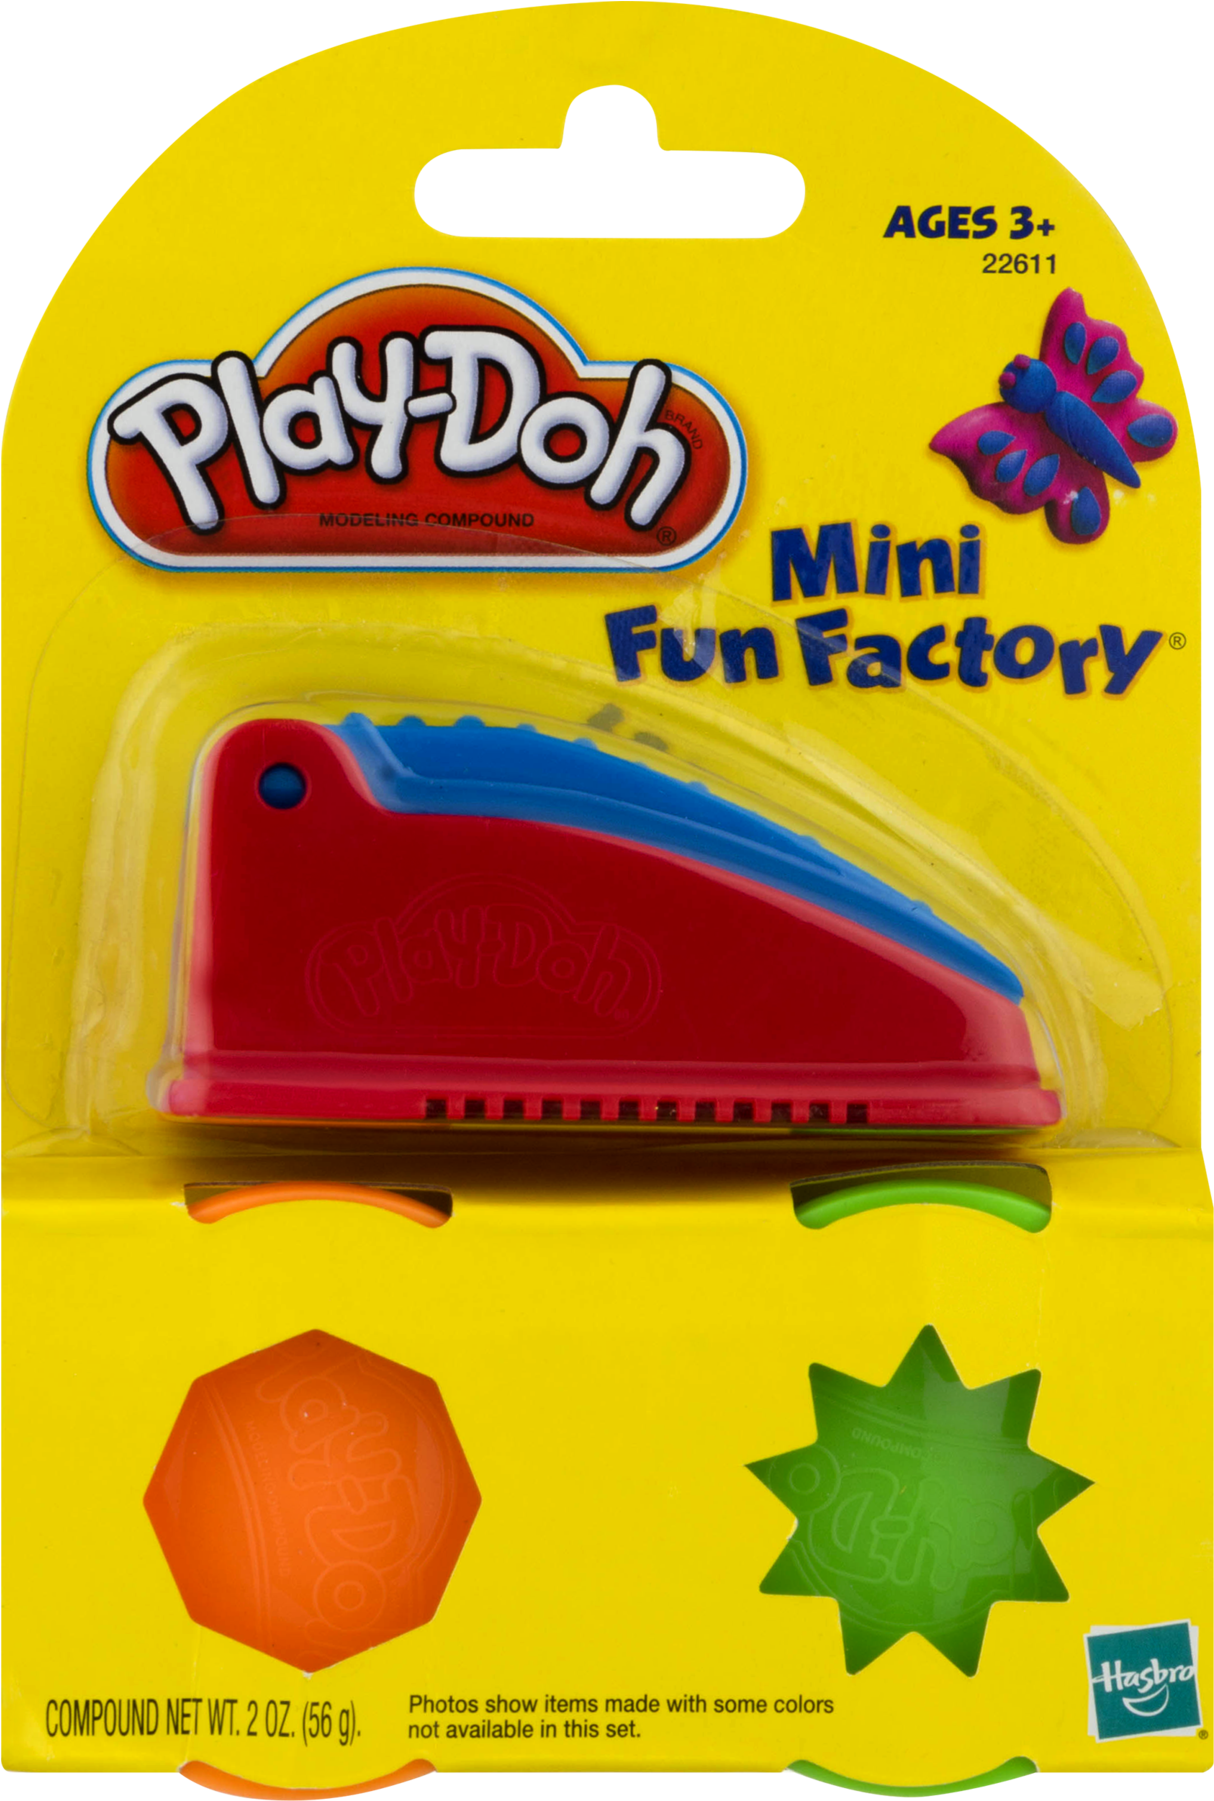 Play Doh Mini Fun Factory Packaging PNG image